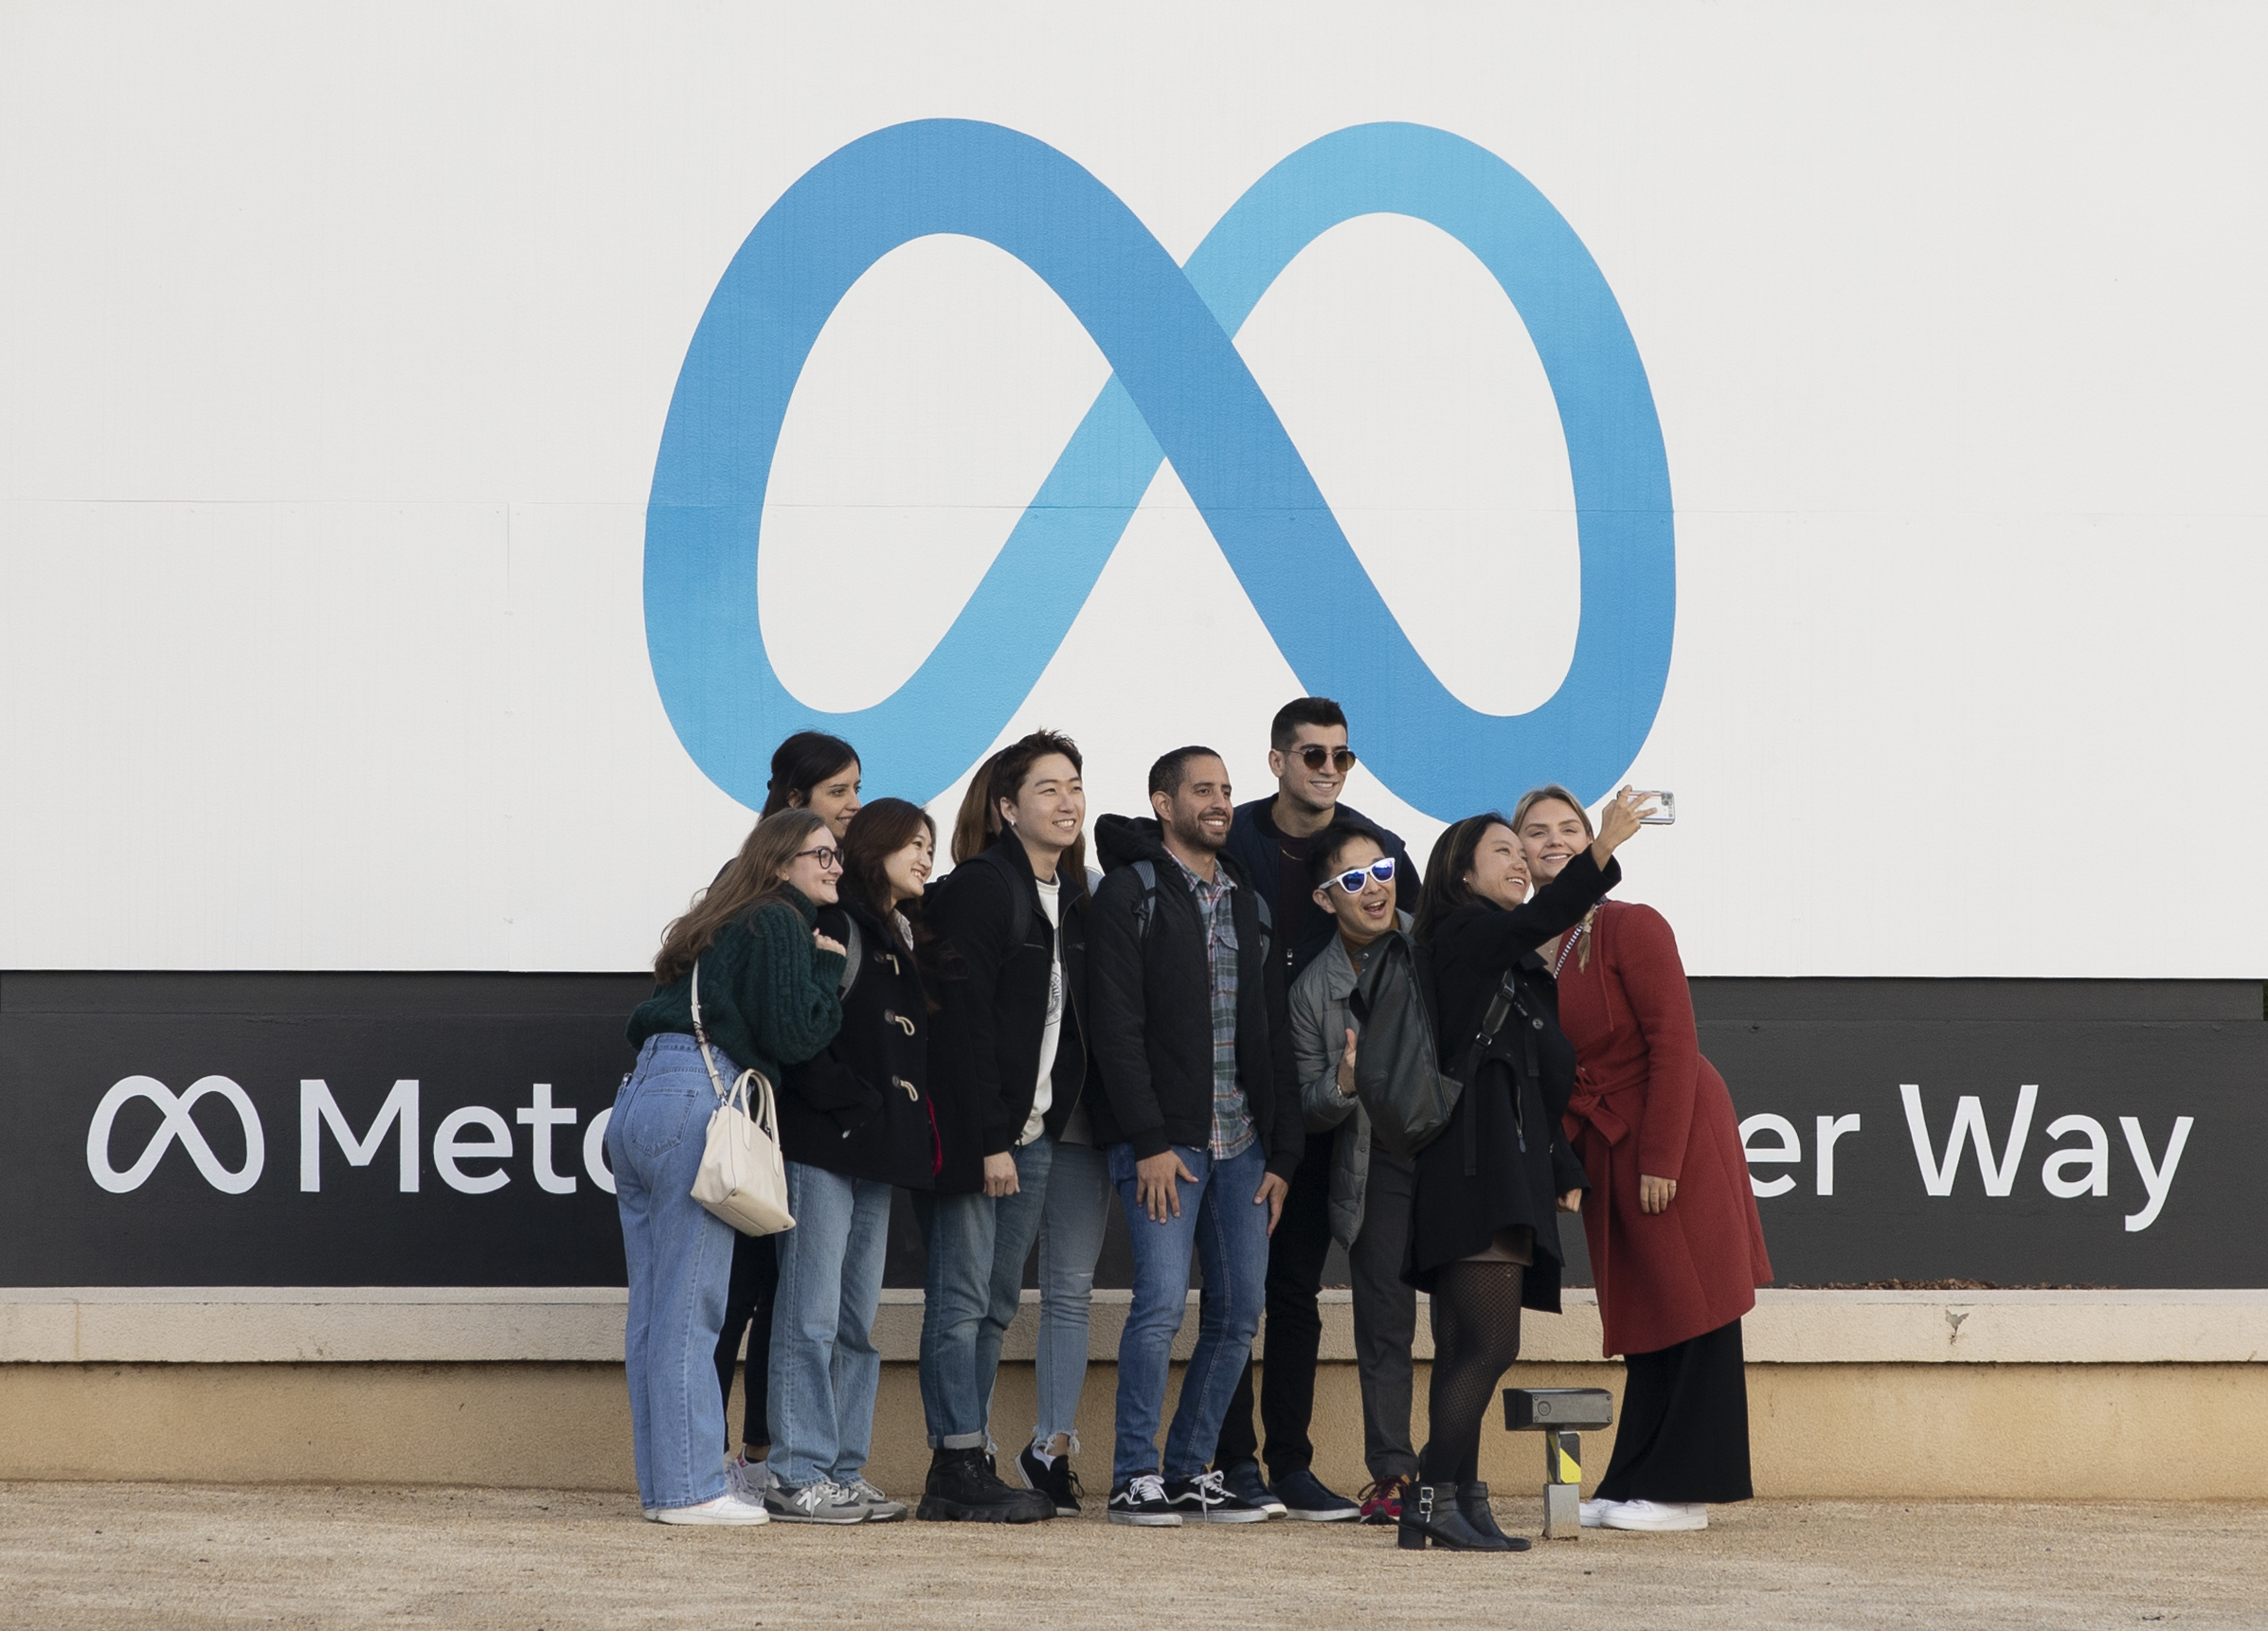 A group of people standing below the Meta infinity symbol.